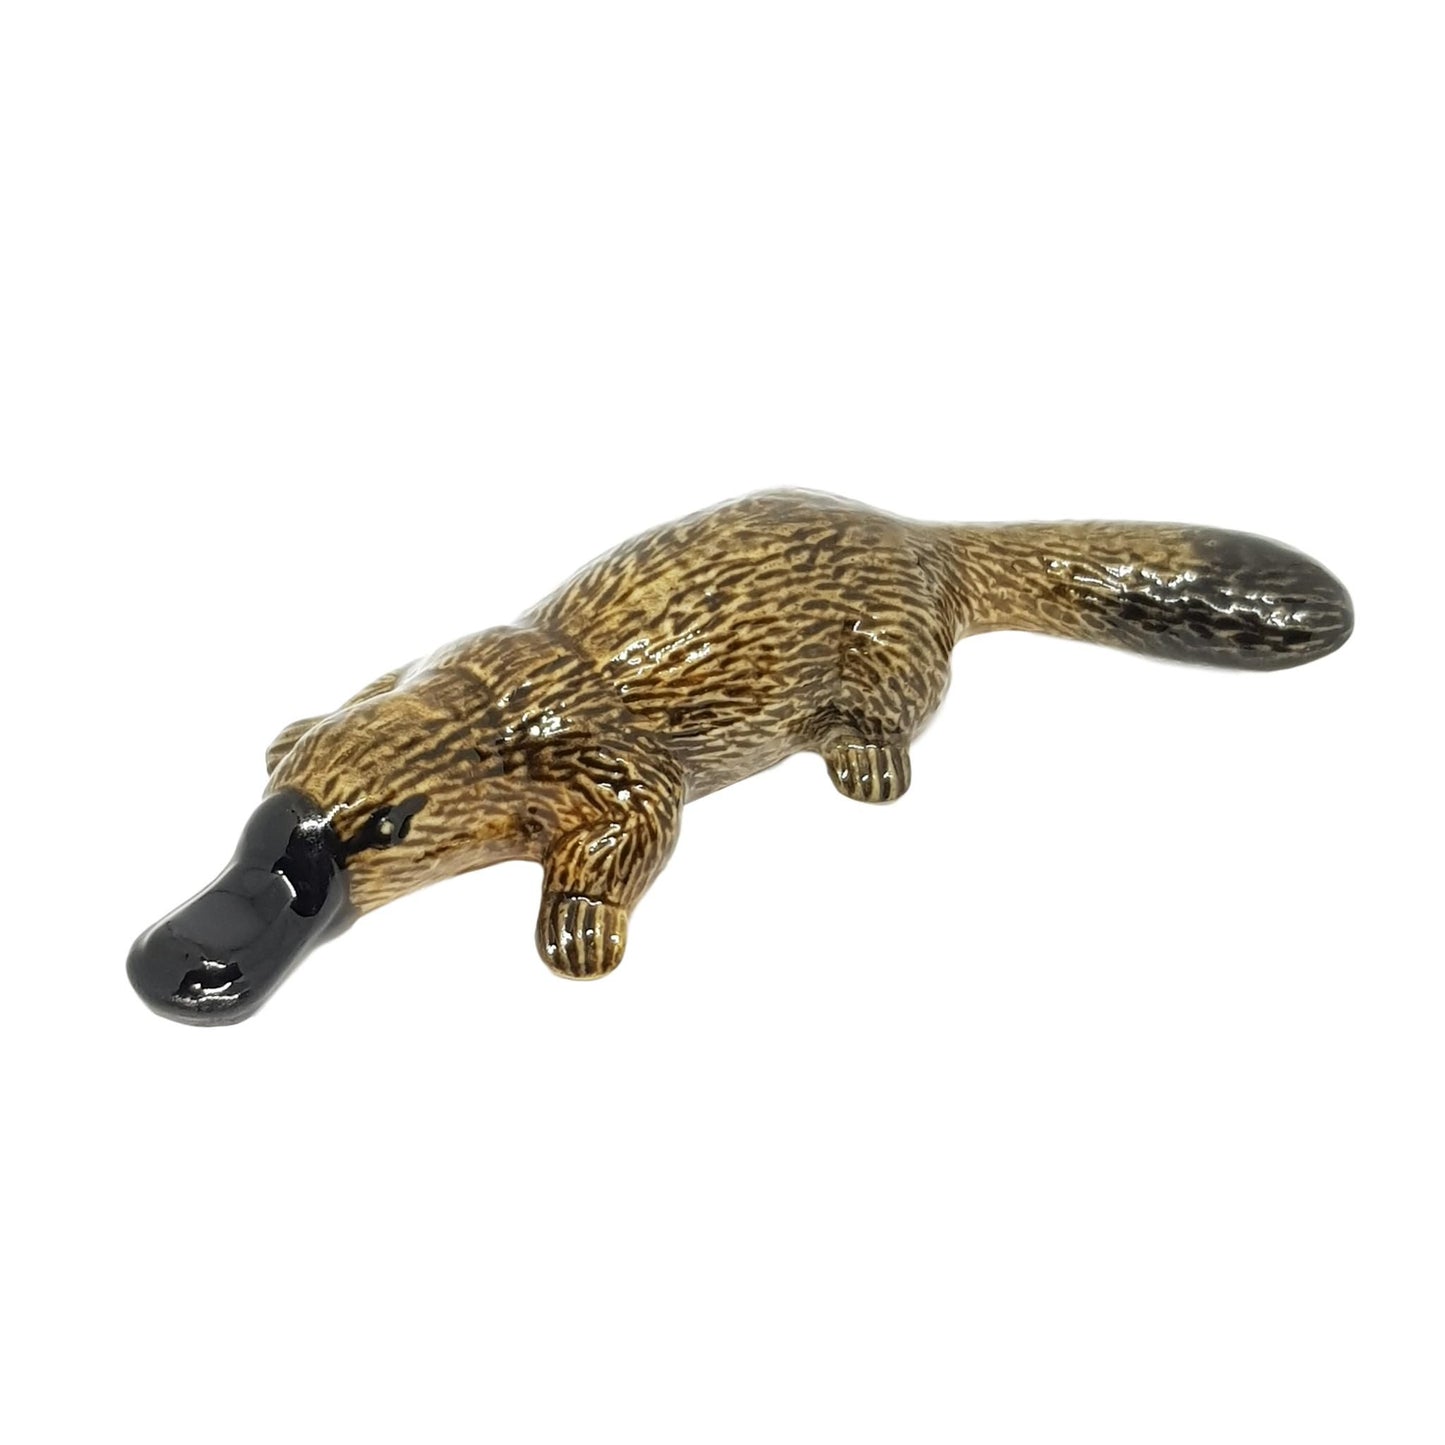 Platypus -New Ceramic miniature Figurine